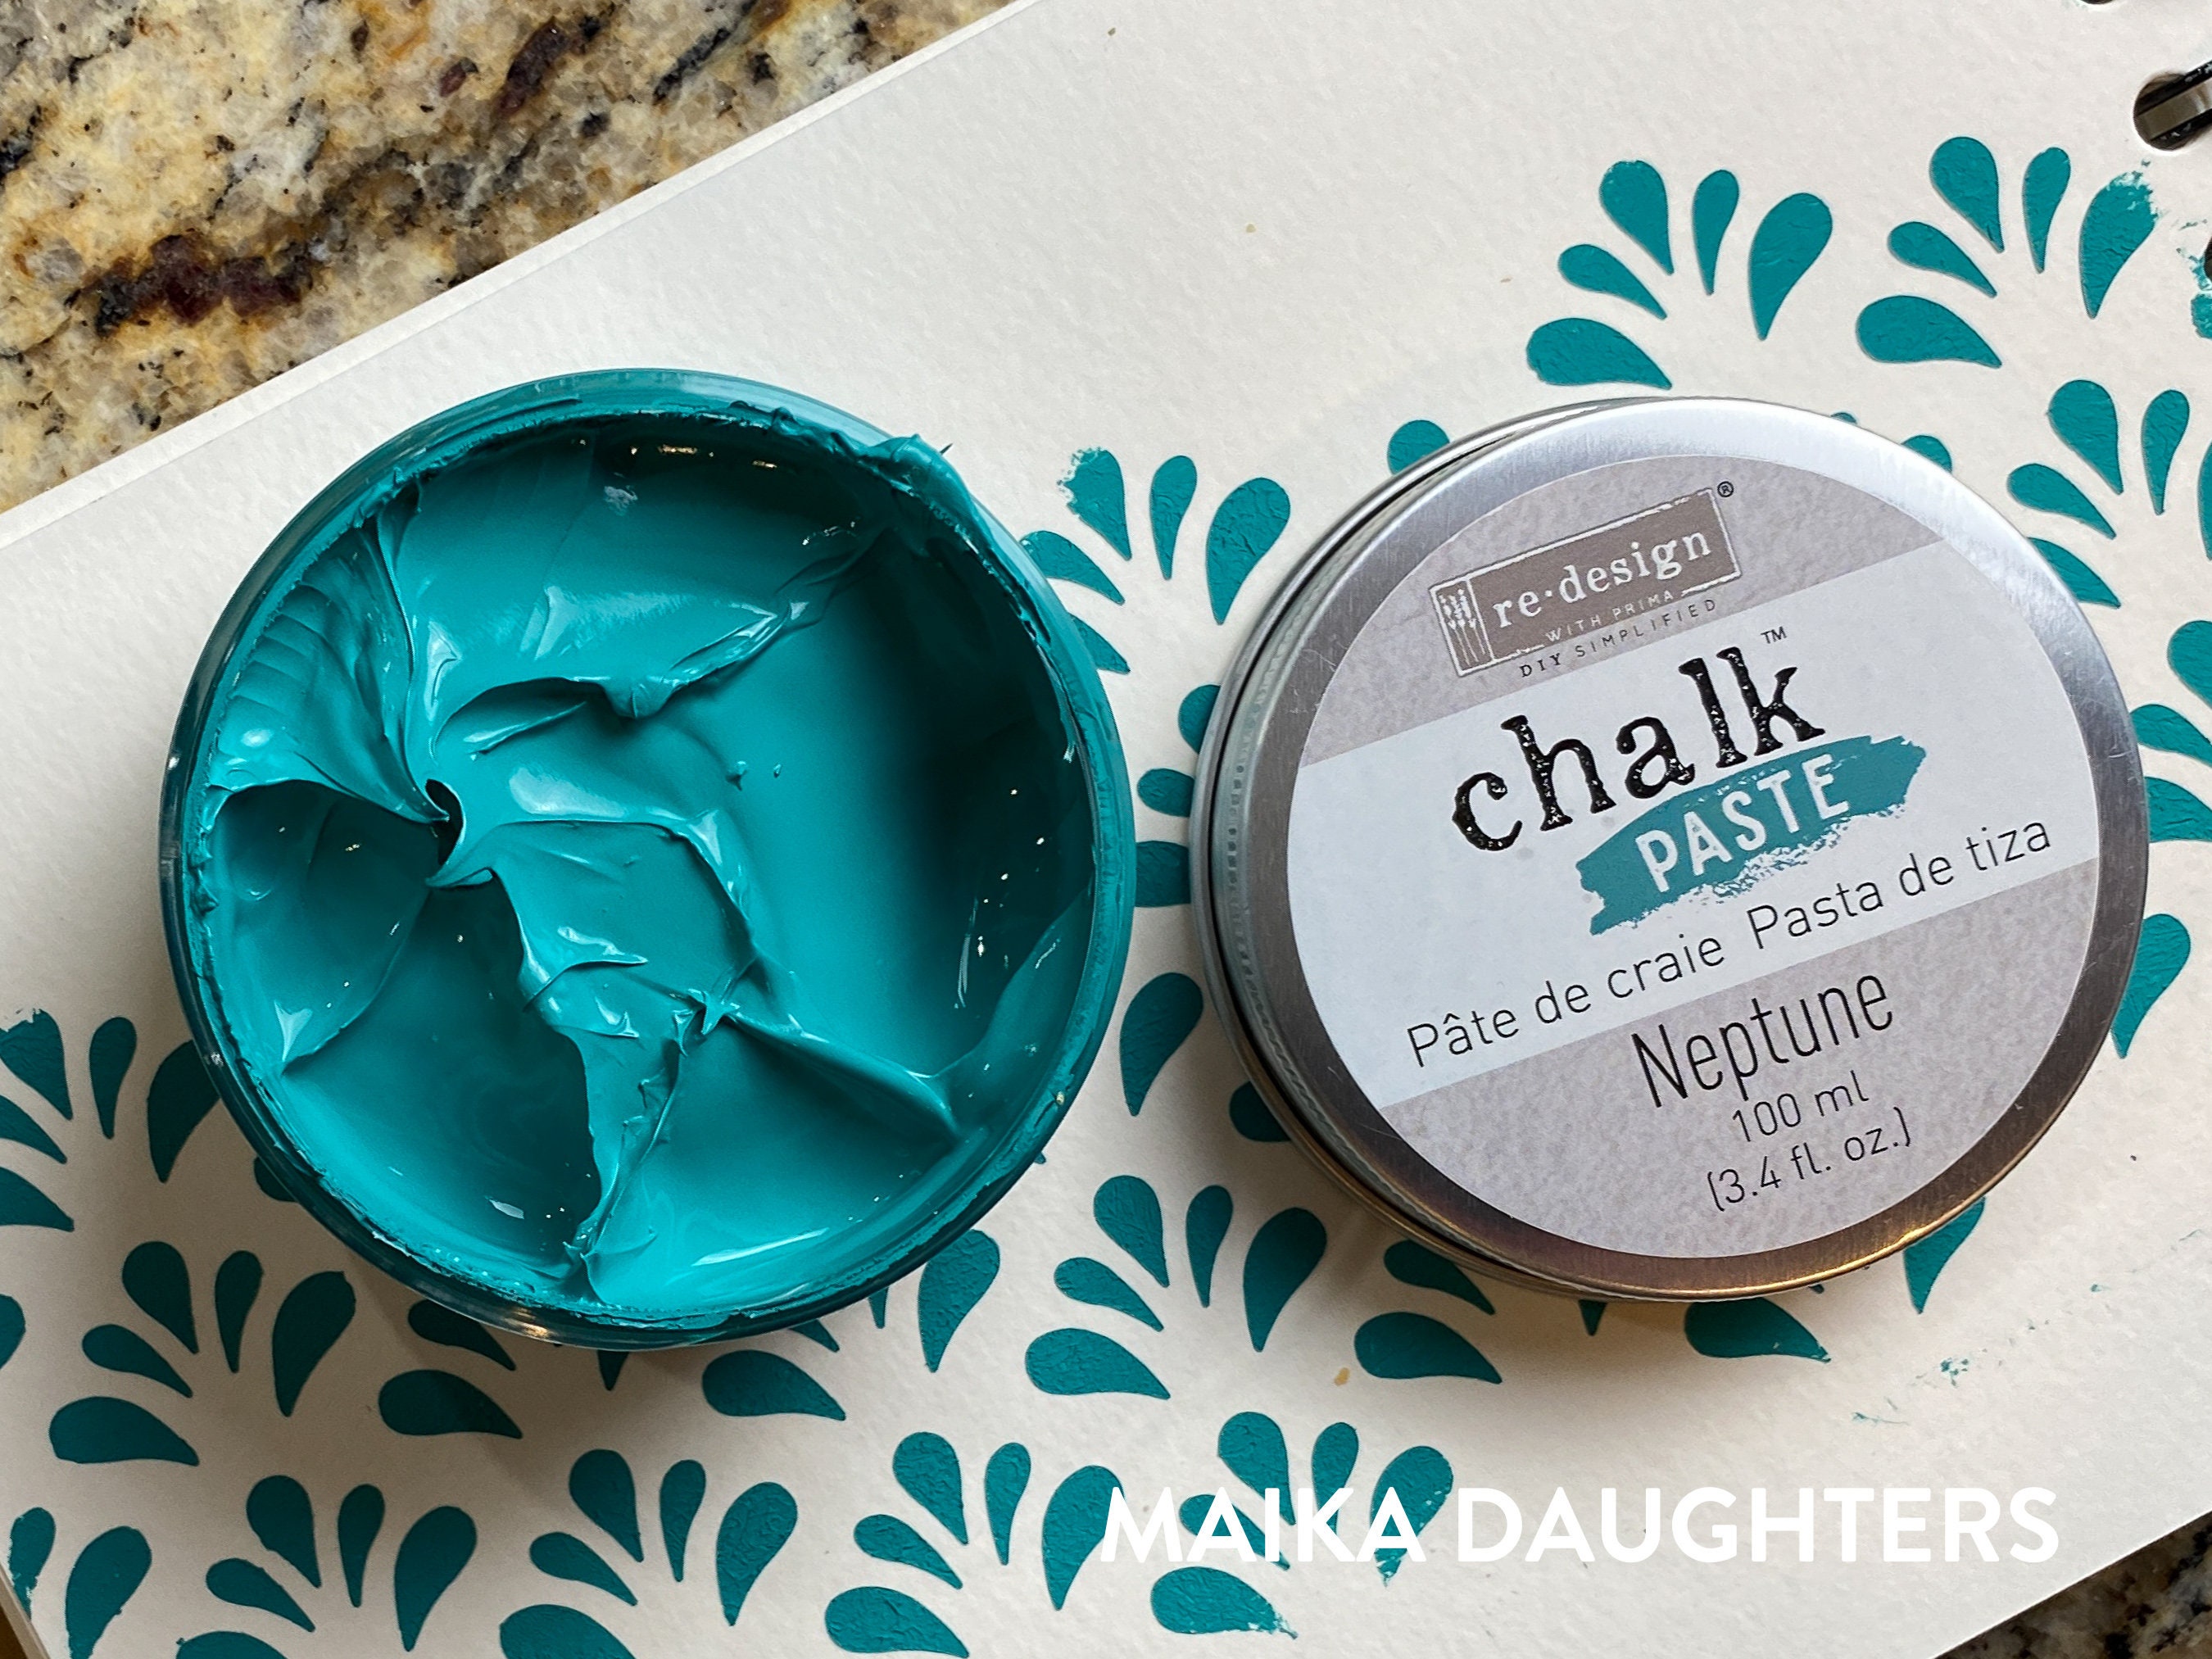 Redesign Chalk Paste® 3.4 fl. oz. (100ml) - Iron Gate